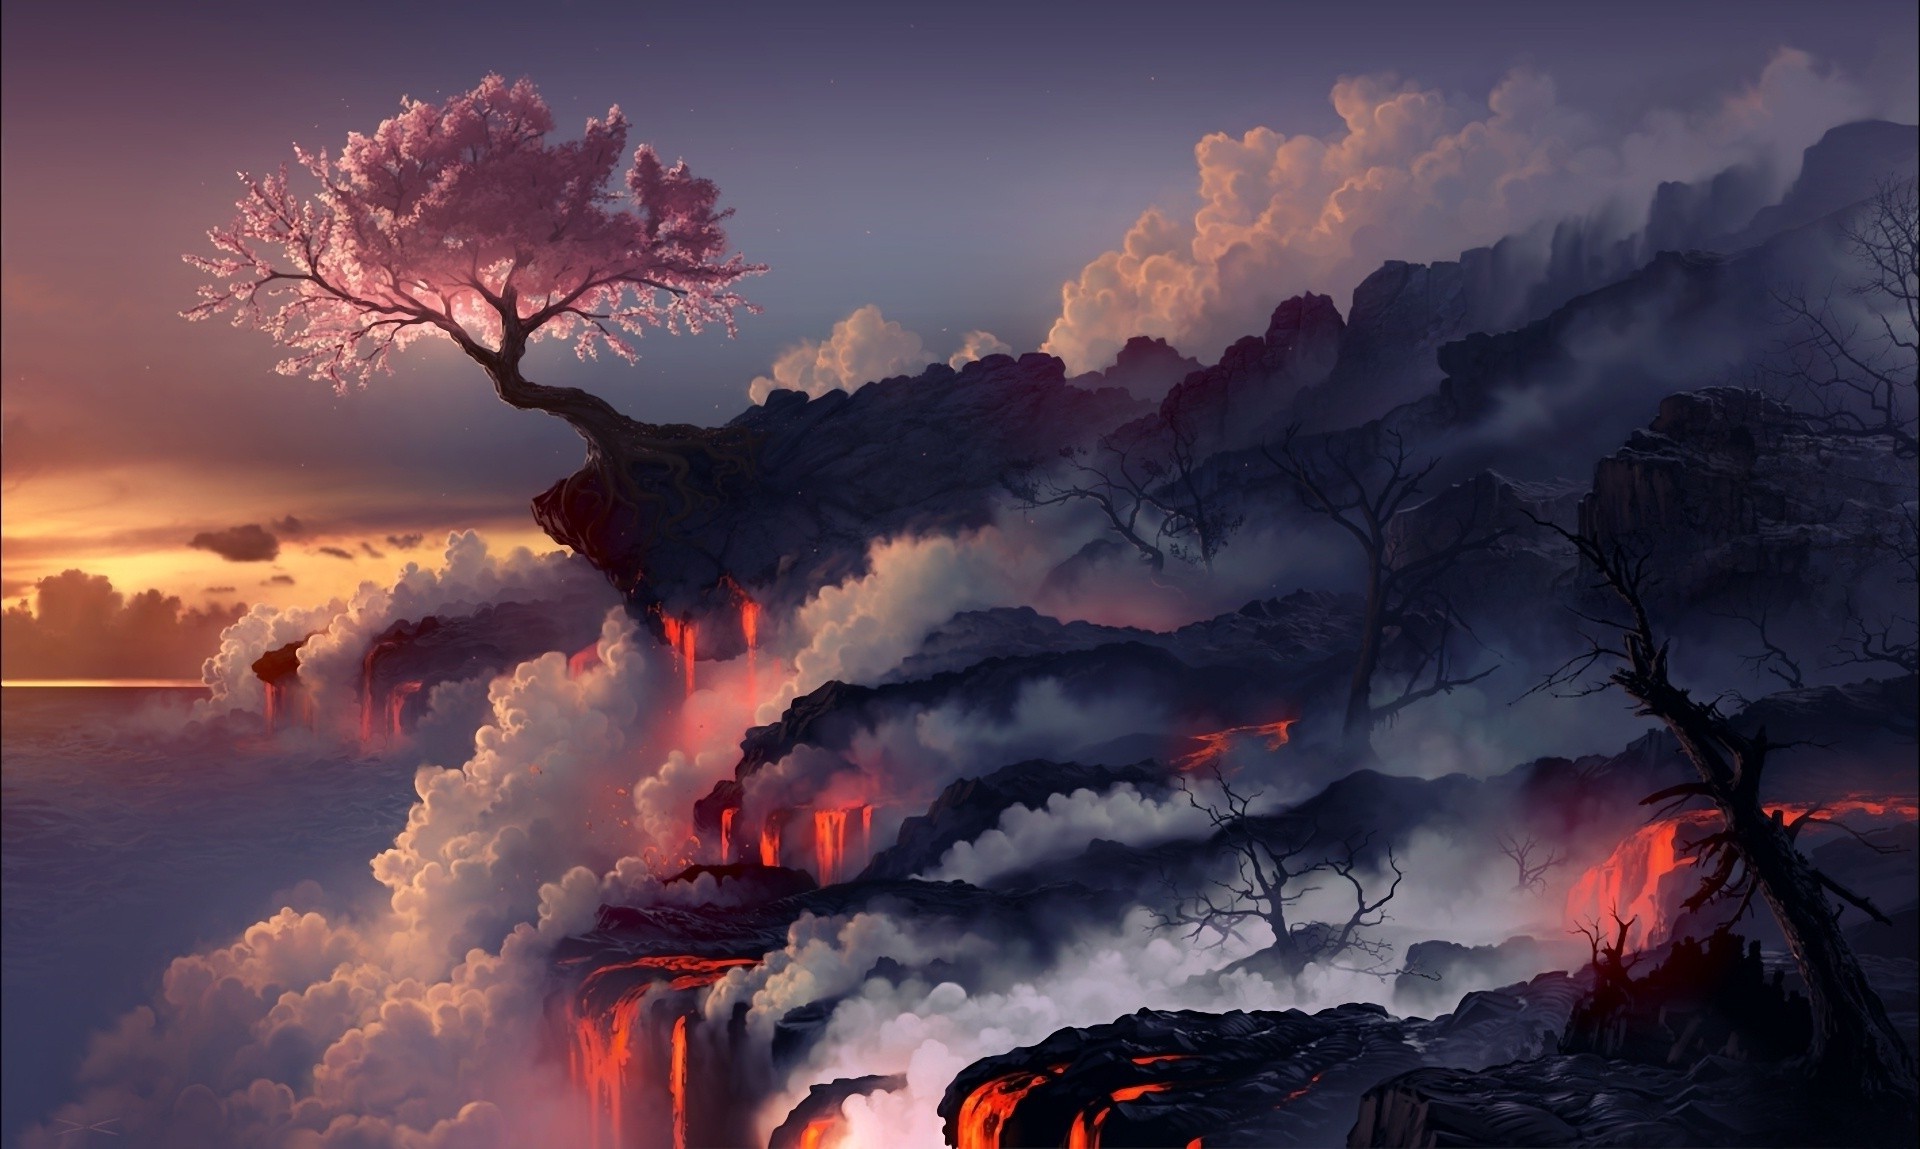 artwork, Nature, Landscape, Fantasy art, Fire, Trees, Lava, Cherry blossom, Clouds, Smoke, Digital art, Fightstar, Album covers Wallpaper